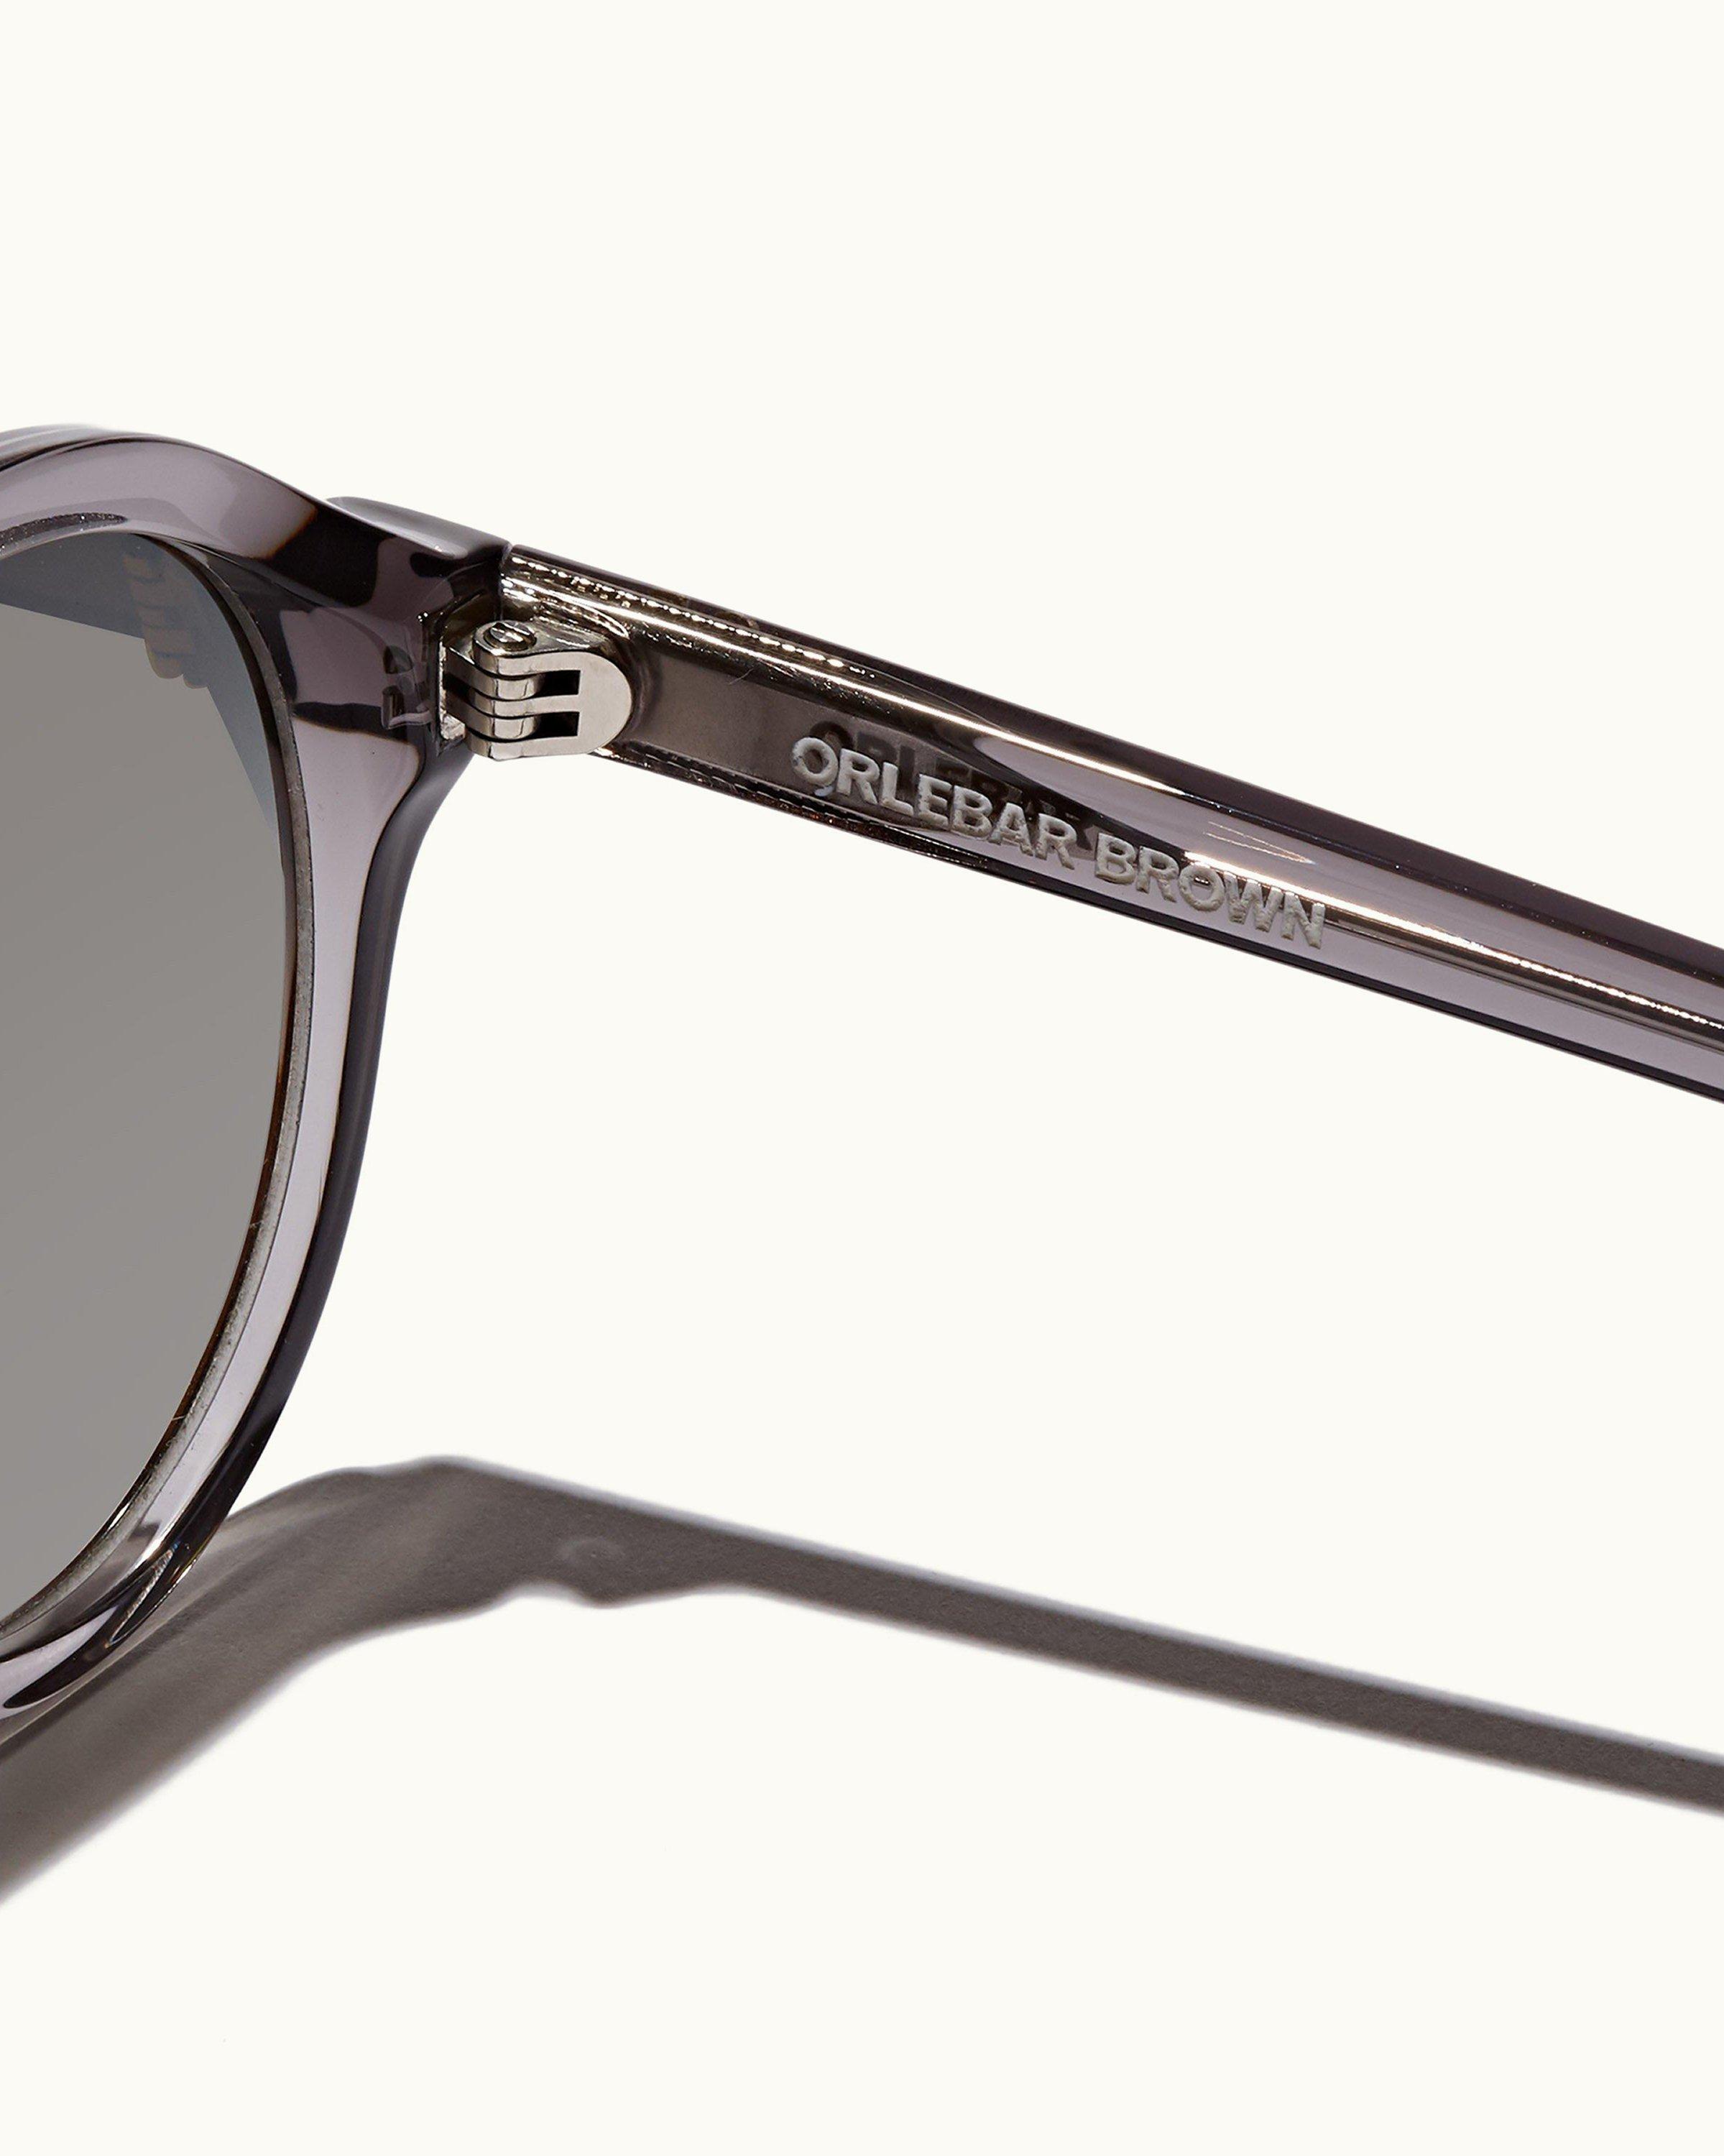 Eyewear for Men Luxury Orlebar Designer Brown Sunglasses |